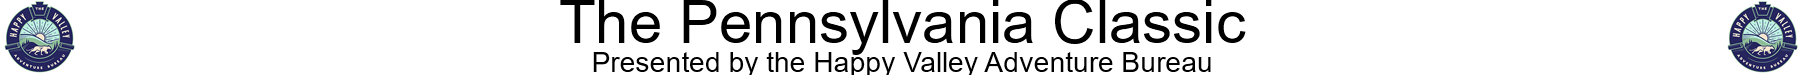 Altoona happy valley banner 2